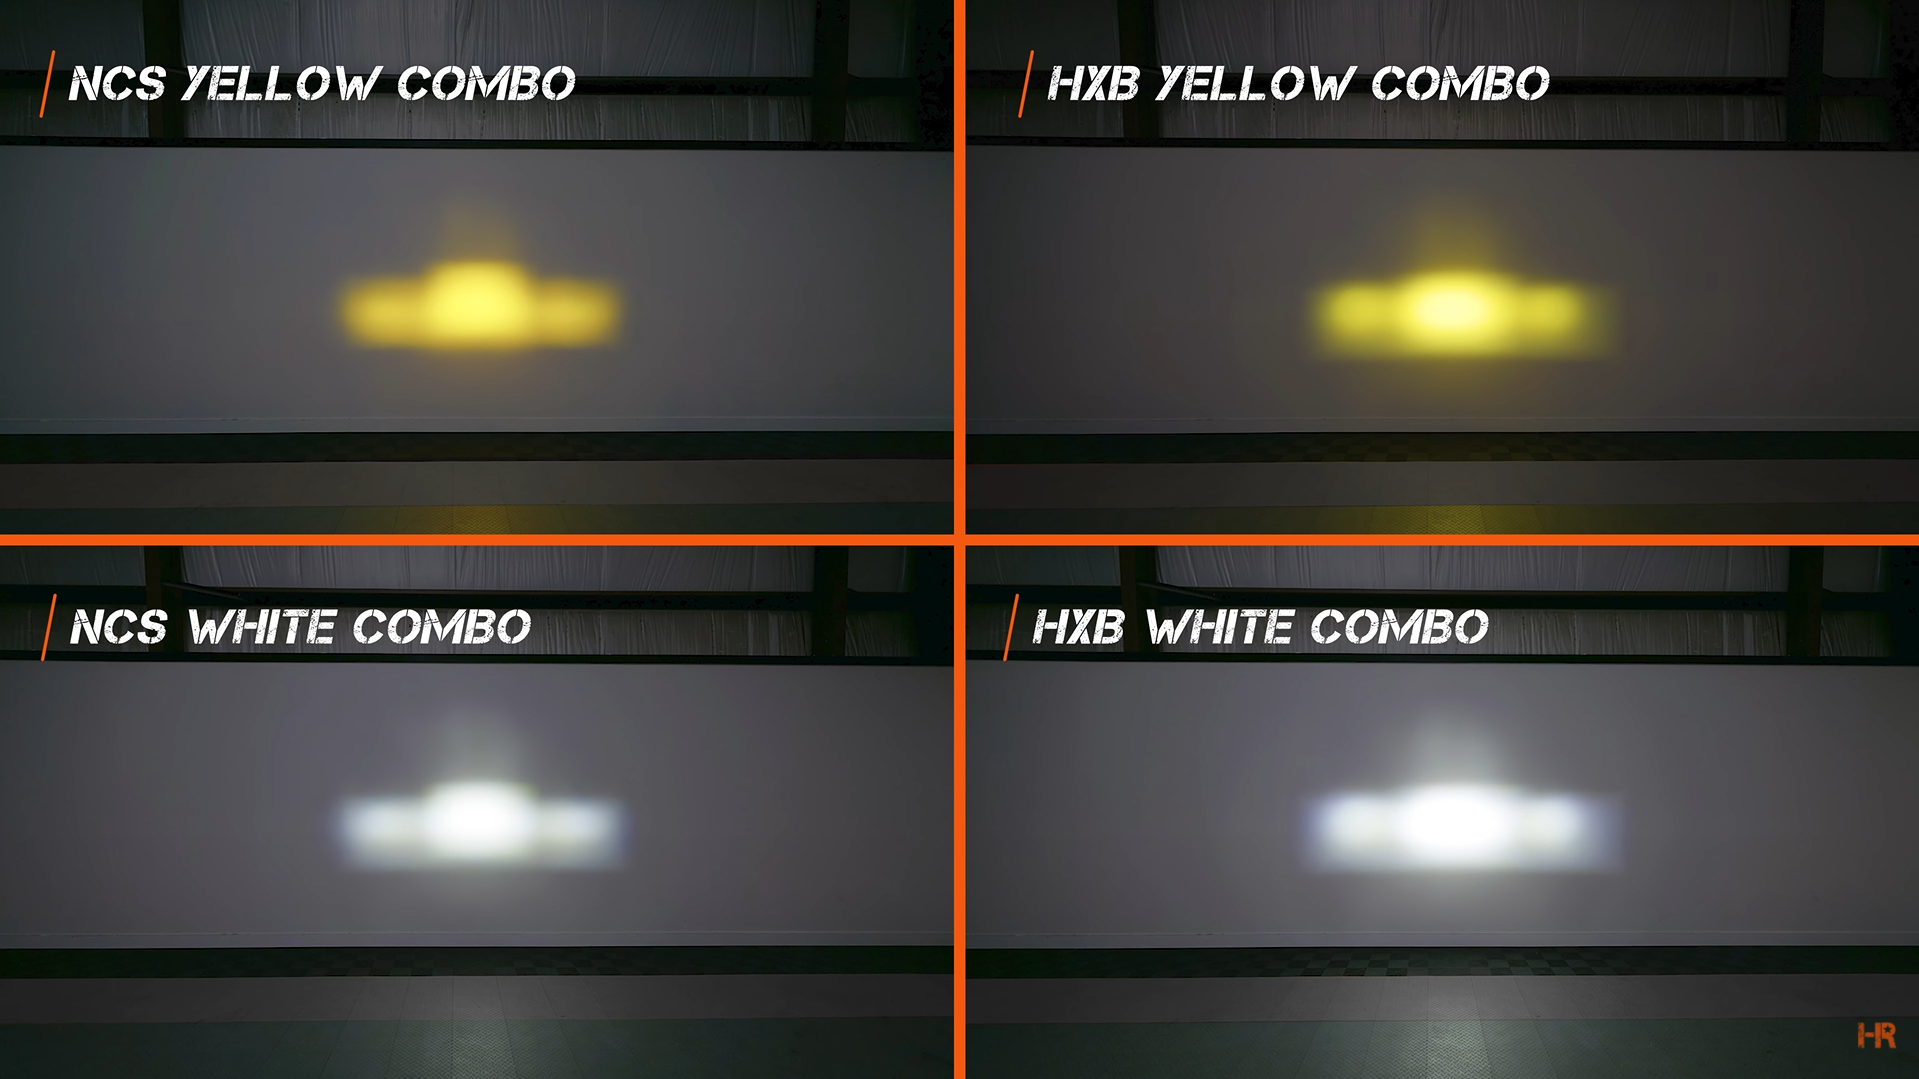 Morimoto 4Banger LED Off Road Lights Pod, Fog lights, spotlight, wide beam, driving light, combo beam, Diode Dynamics, Baja Designs